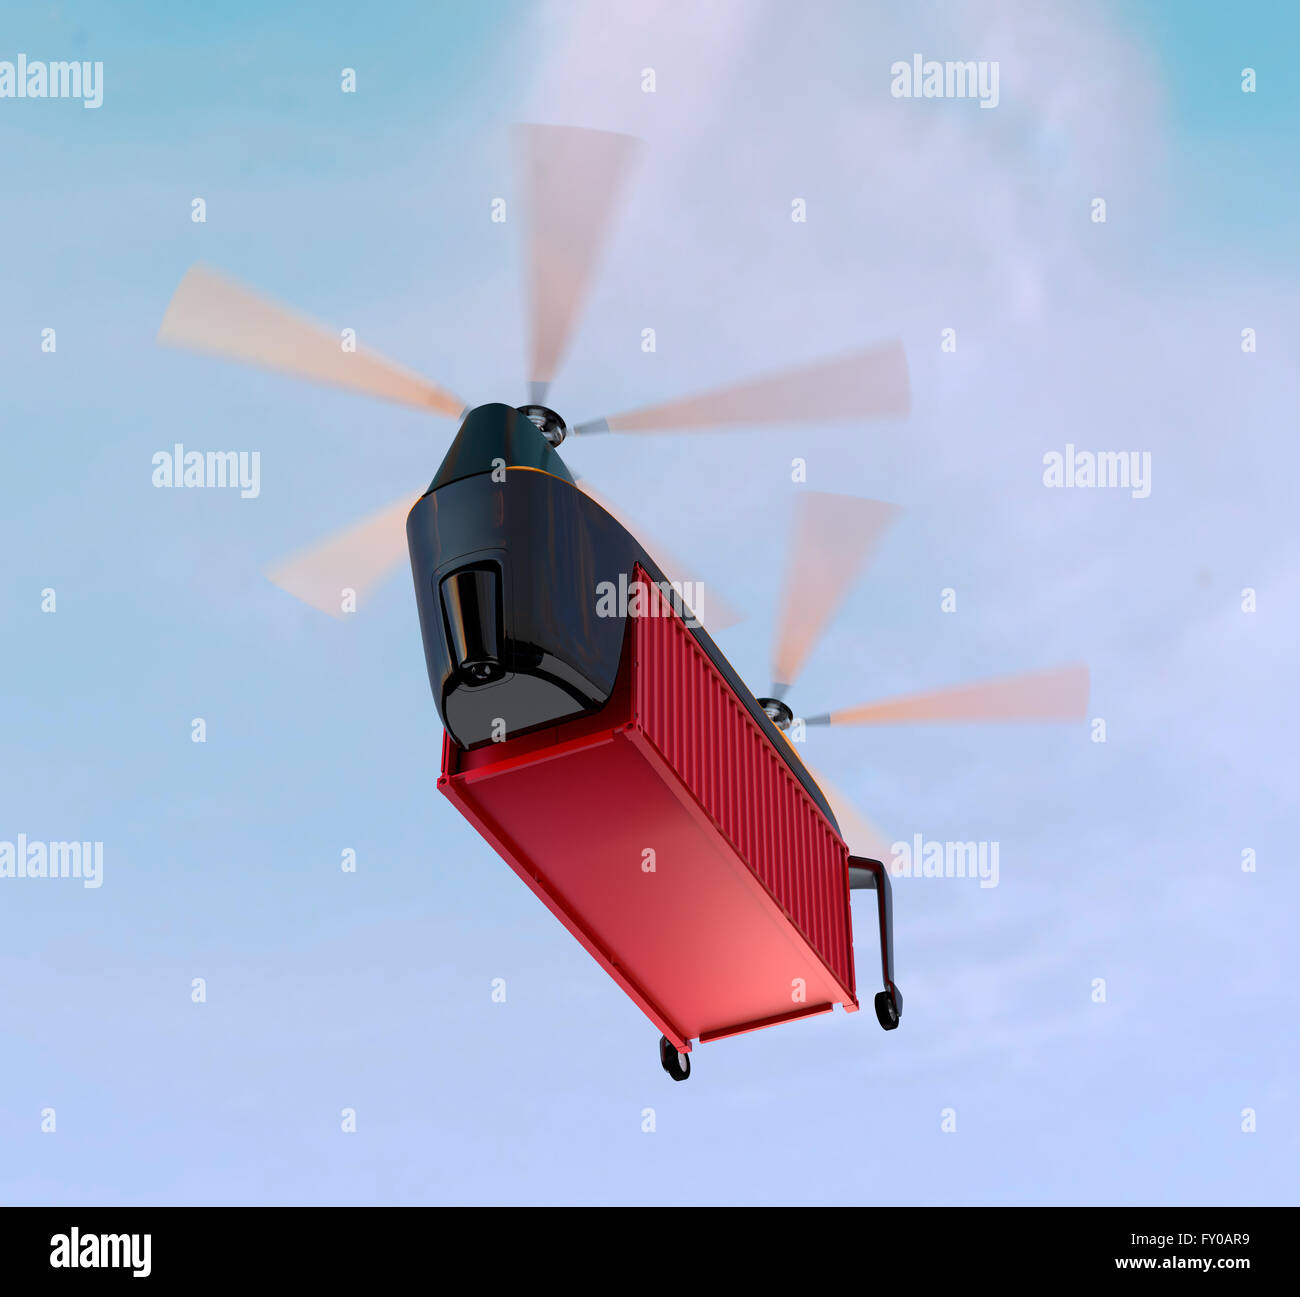 Drohne mit Frachtcontainer fliegen in den Himmel. 3D-Rendering Bild Stockfoto